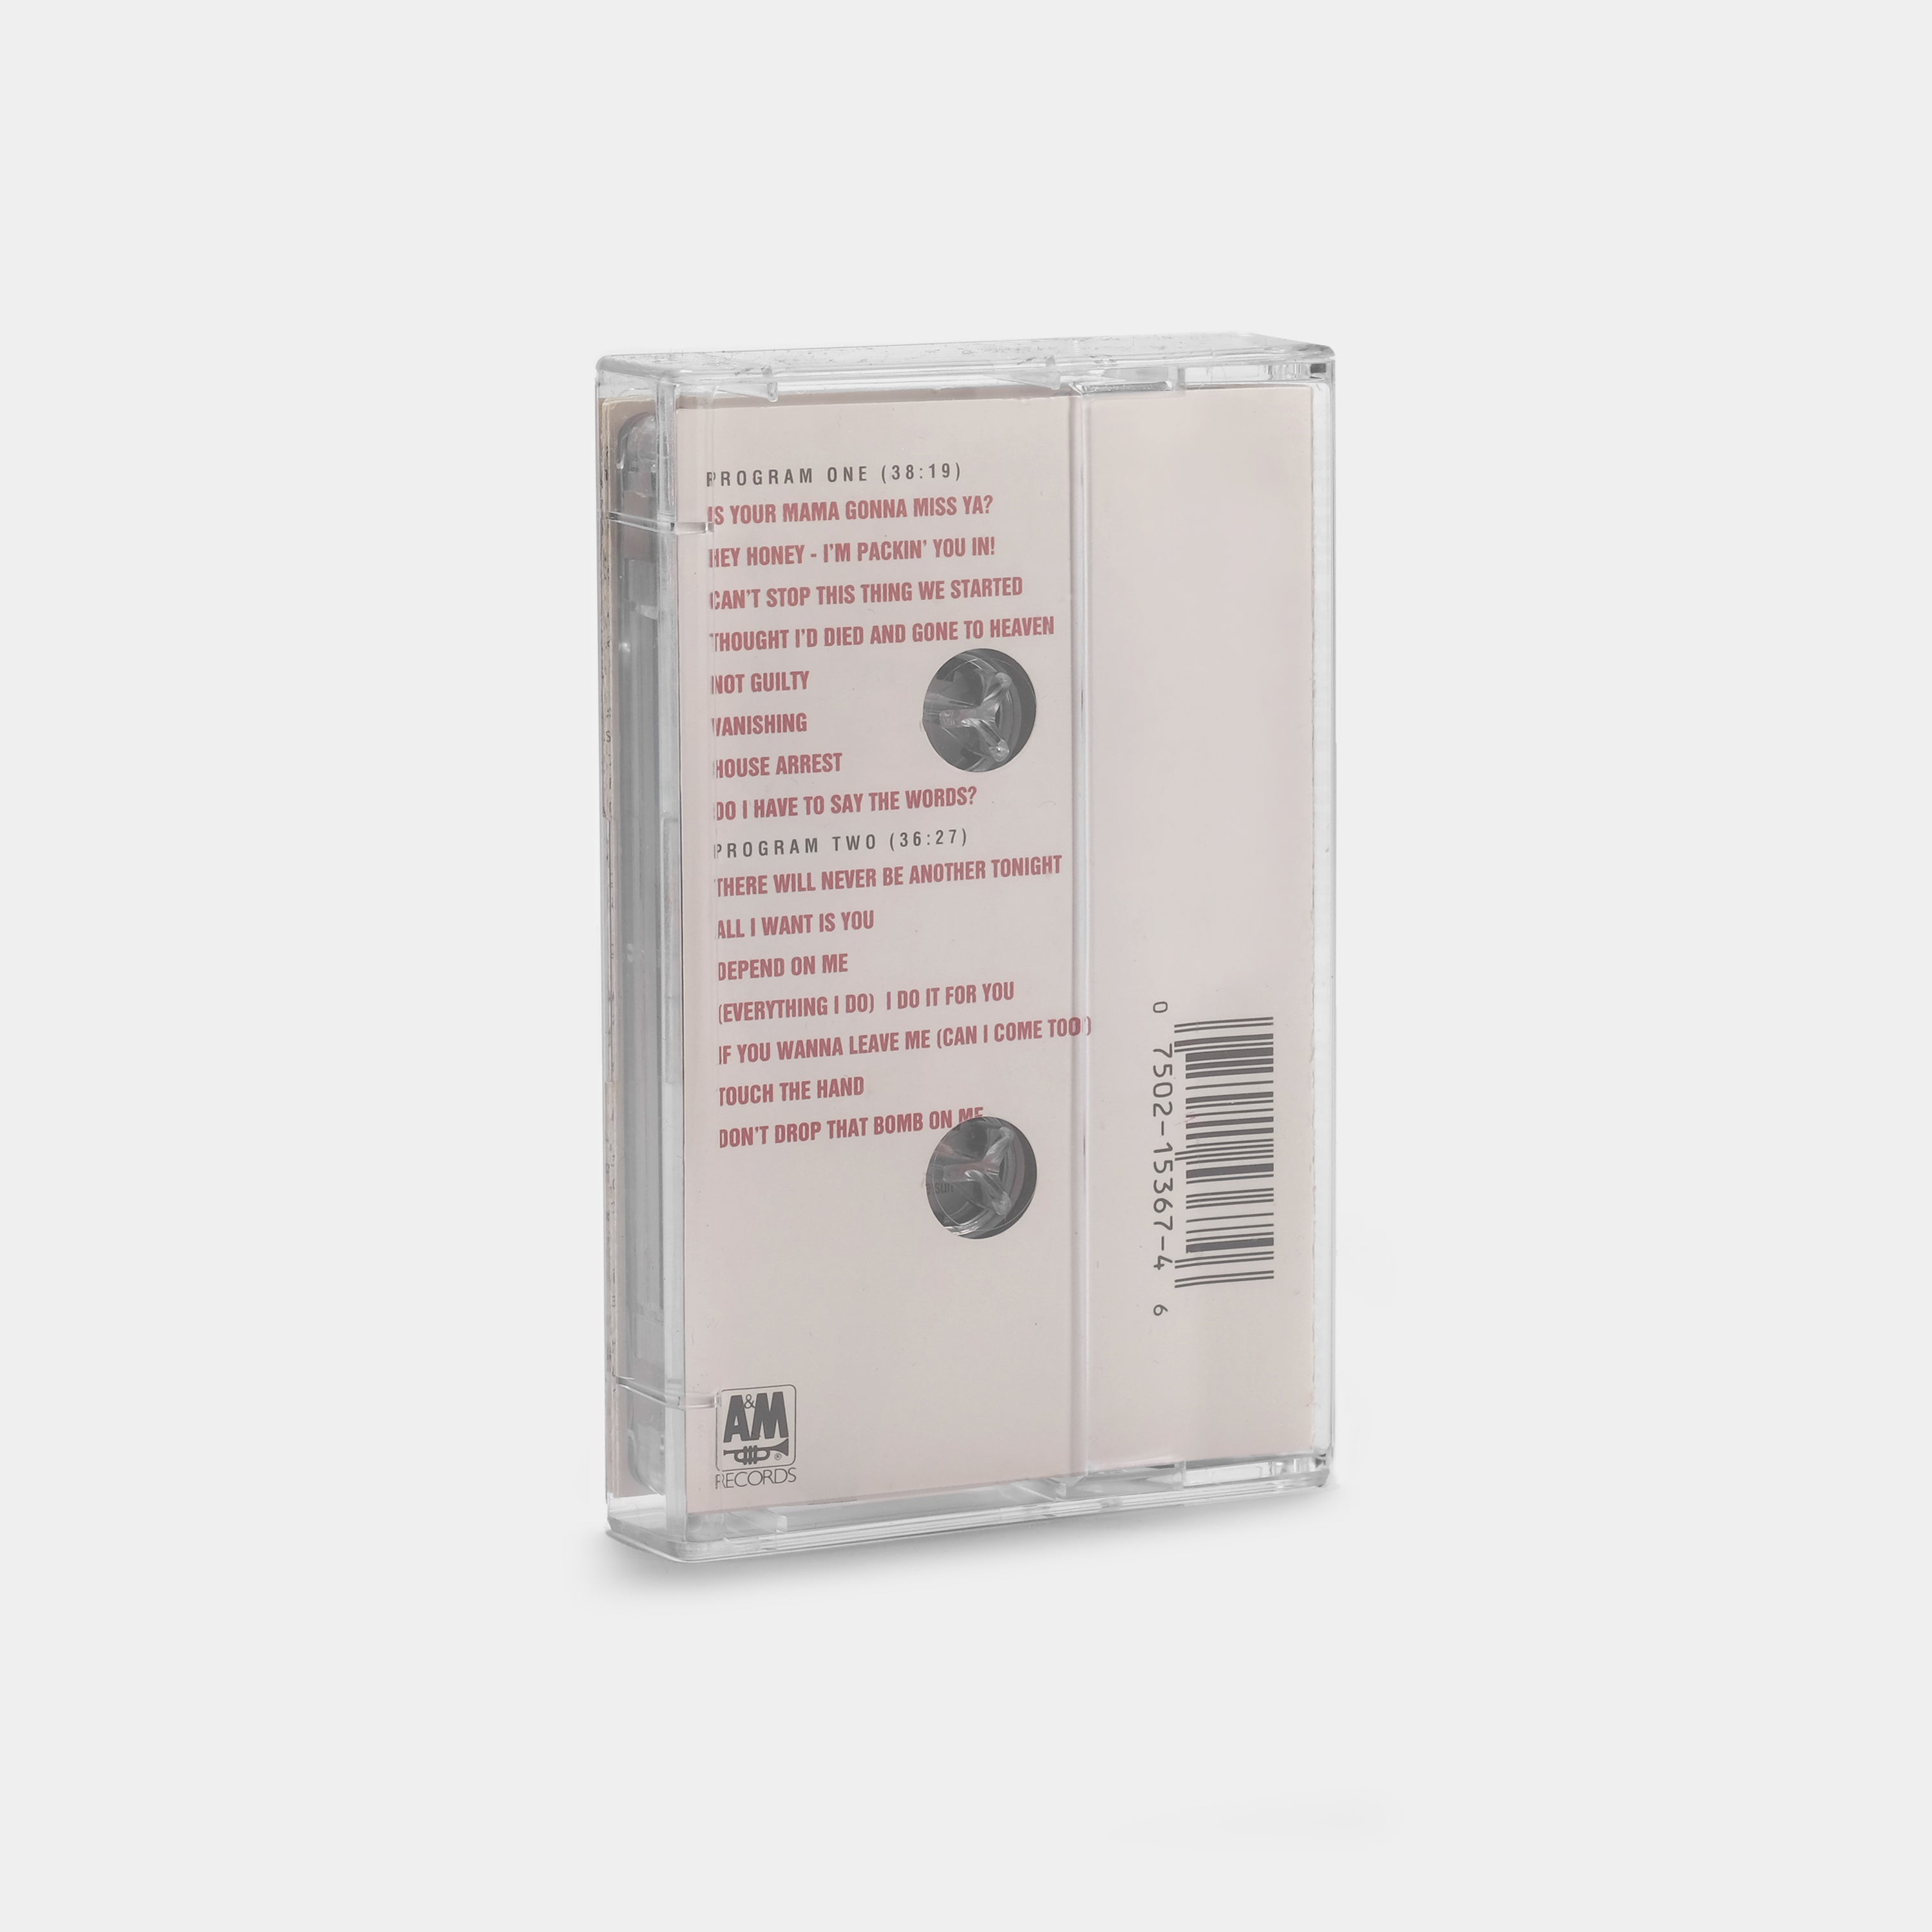 Bryan Adams - Waking Up The Neighbours Cassette Tape